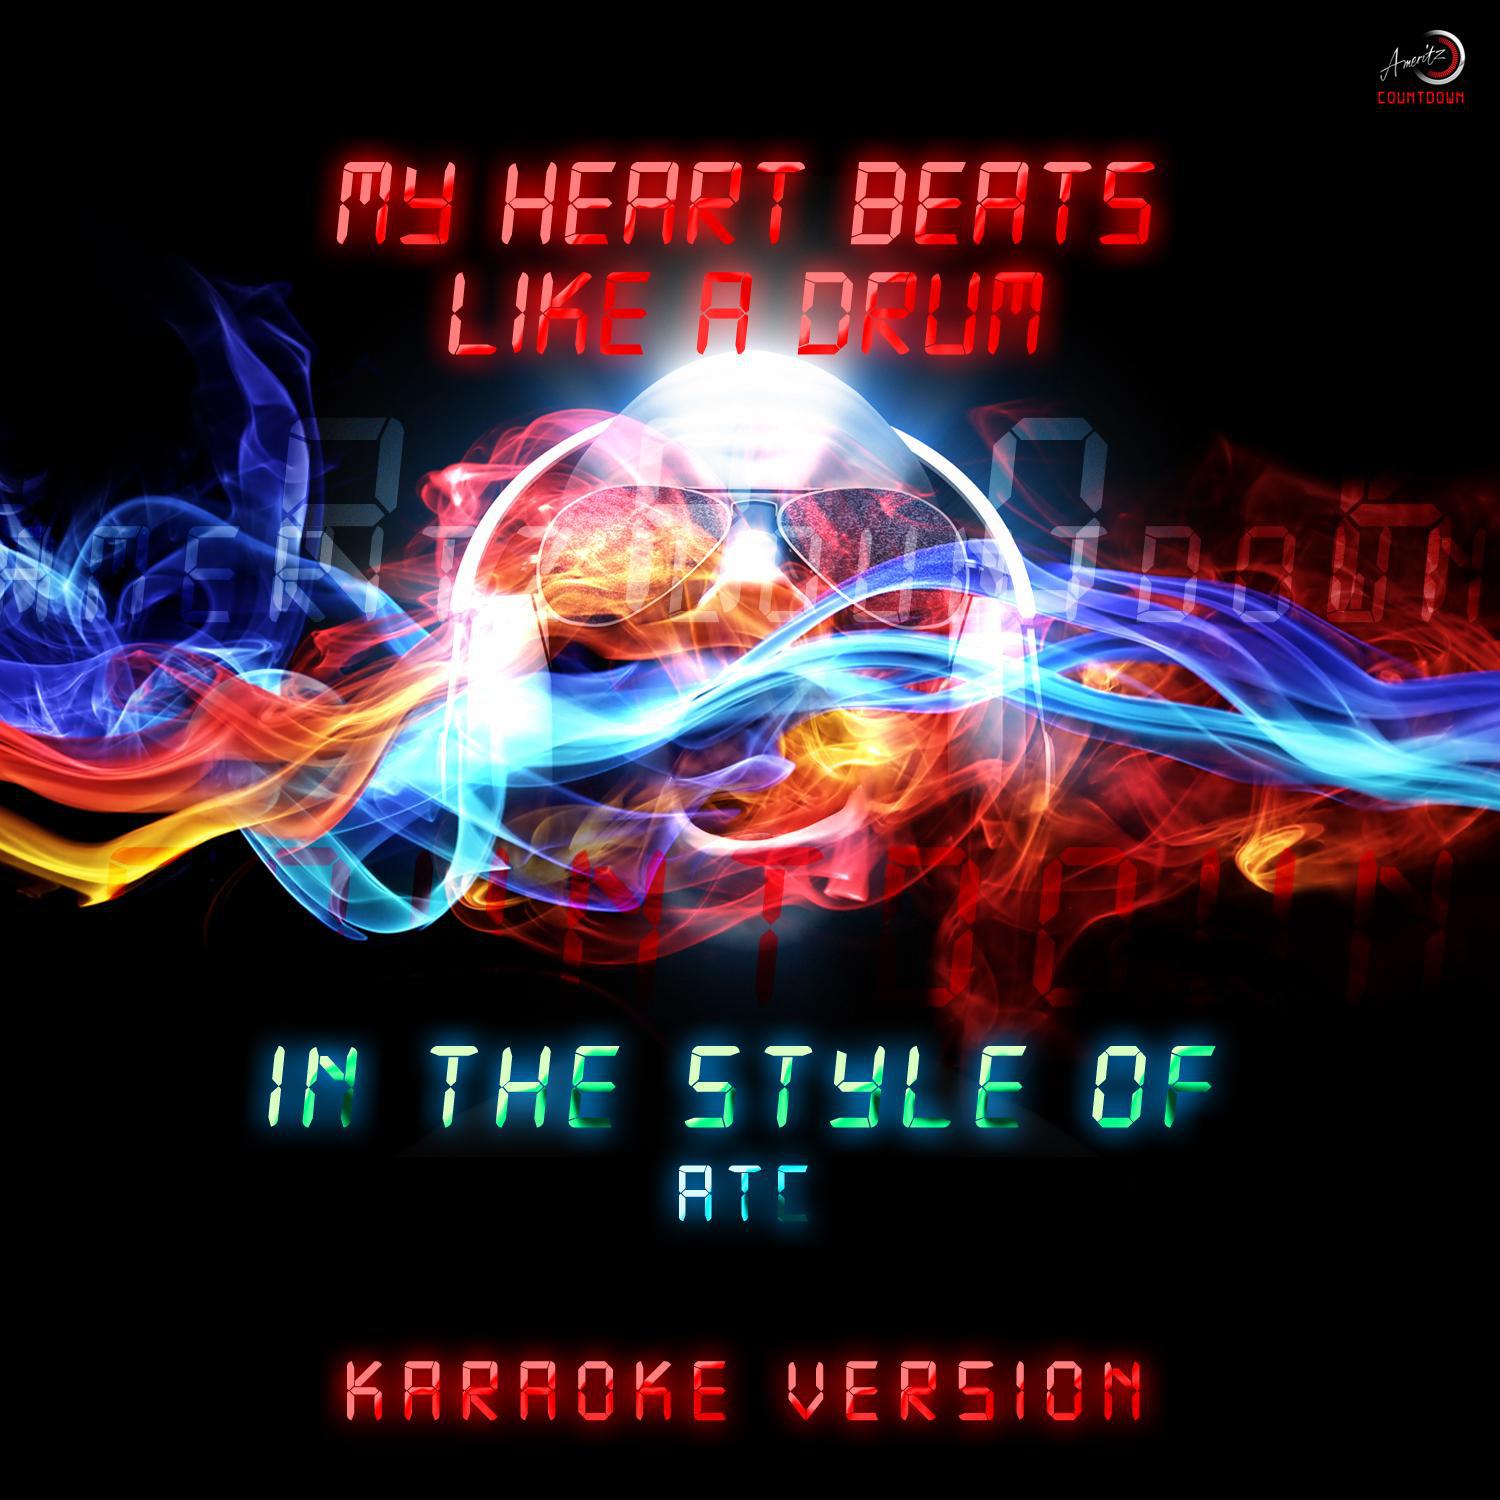 My Heart Beats Like a Drum (In the Style of Atc) [Karaoke Version] - Single